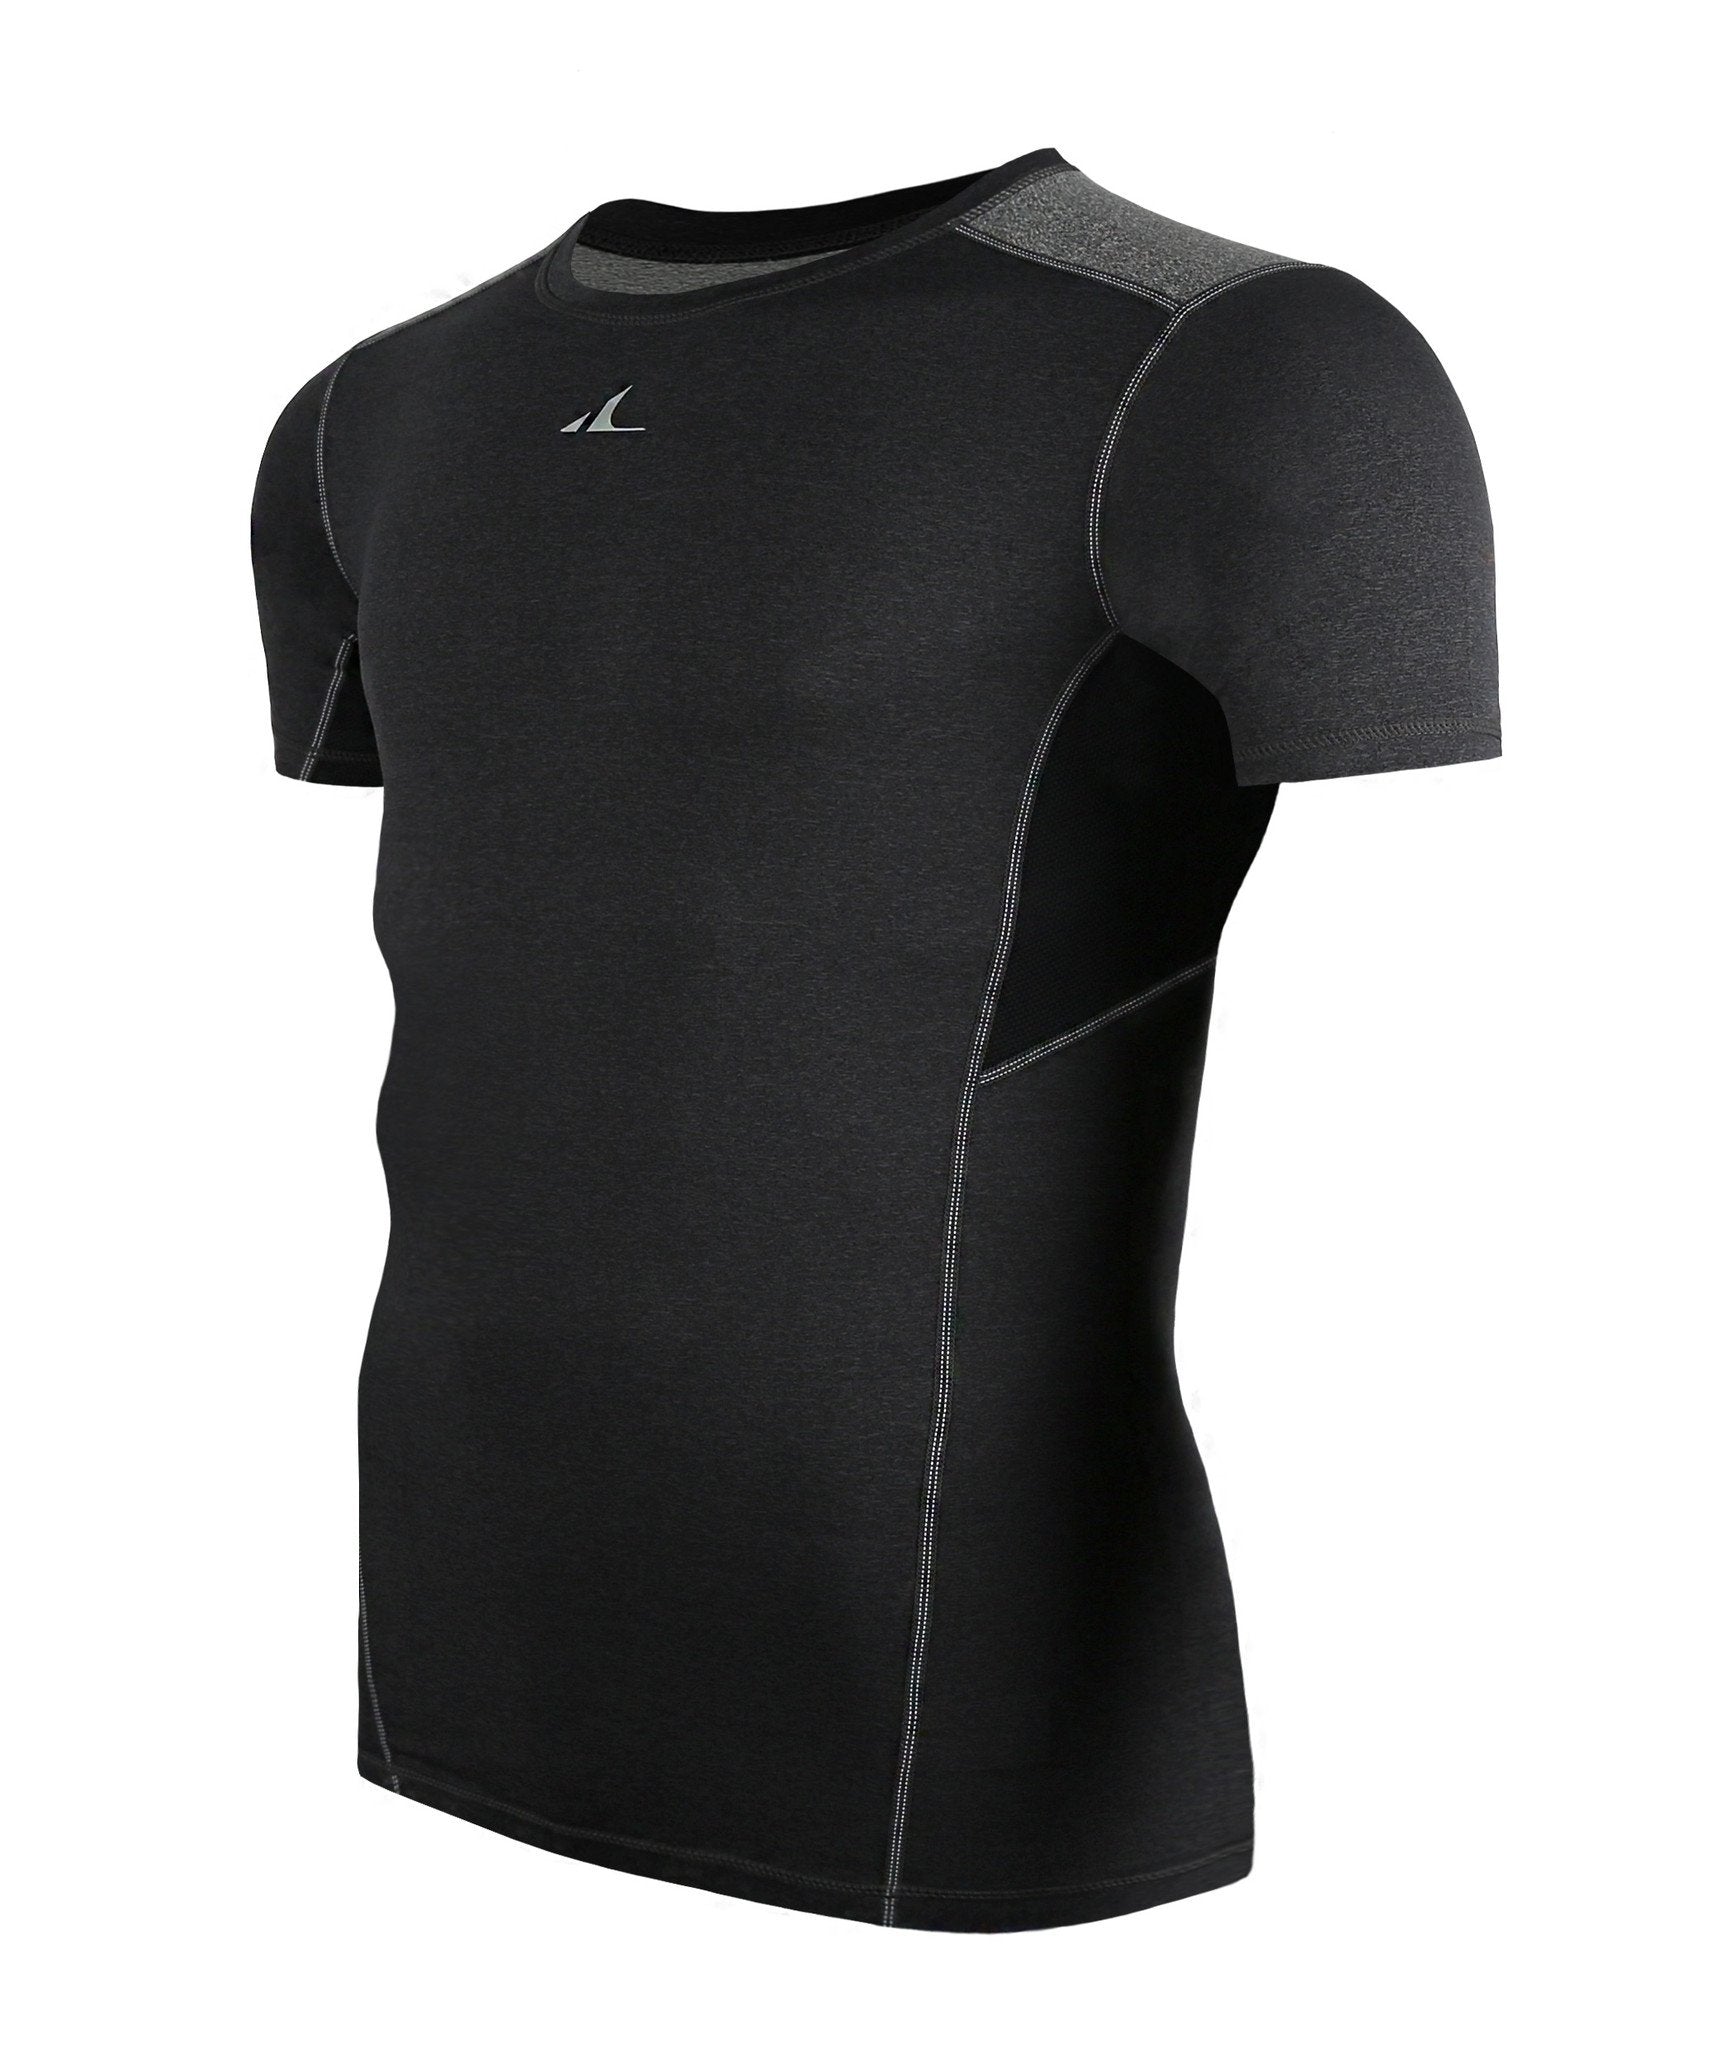 ATHLETE Men's Premium Compression Base Layer Short Sleeve Top Shirt ...